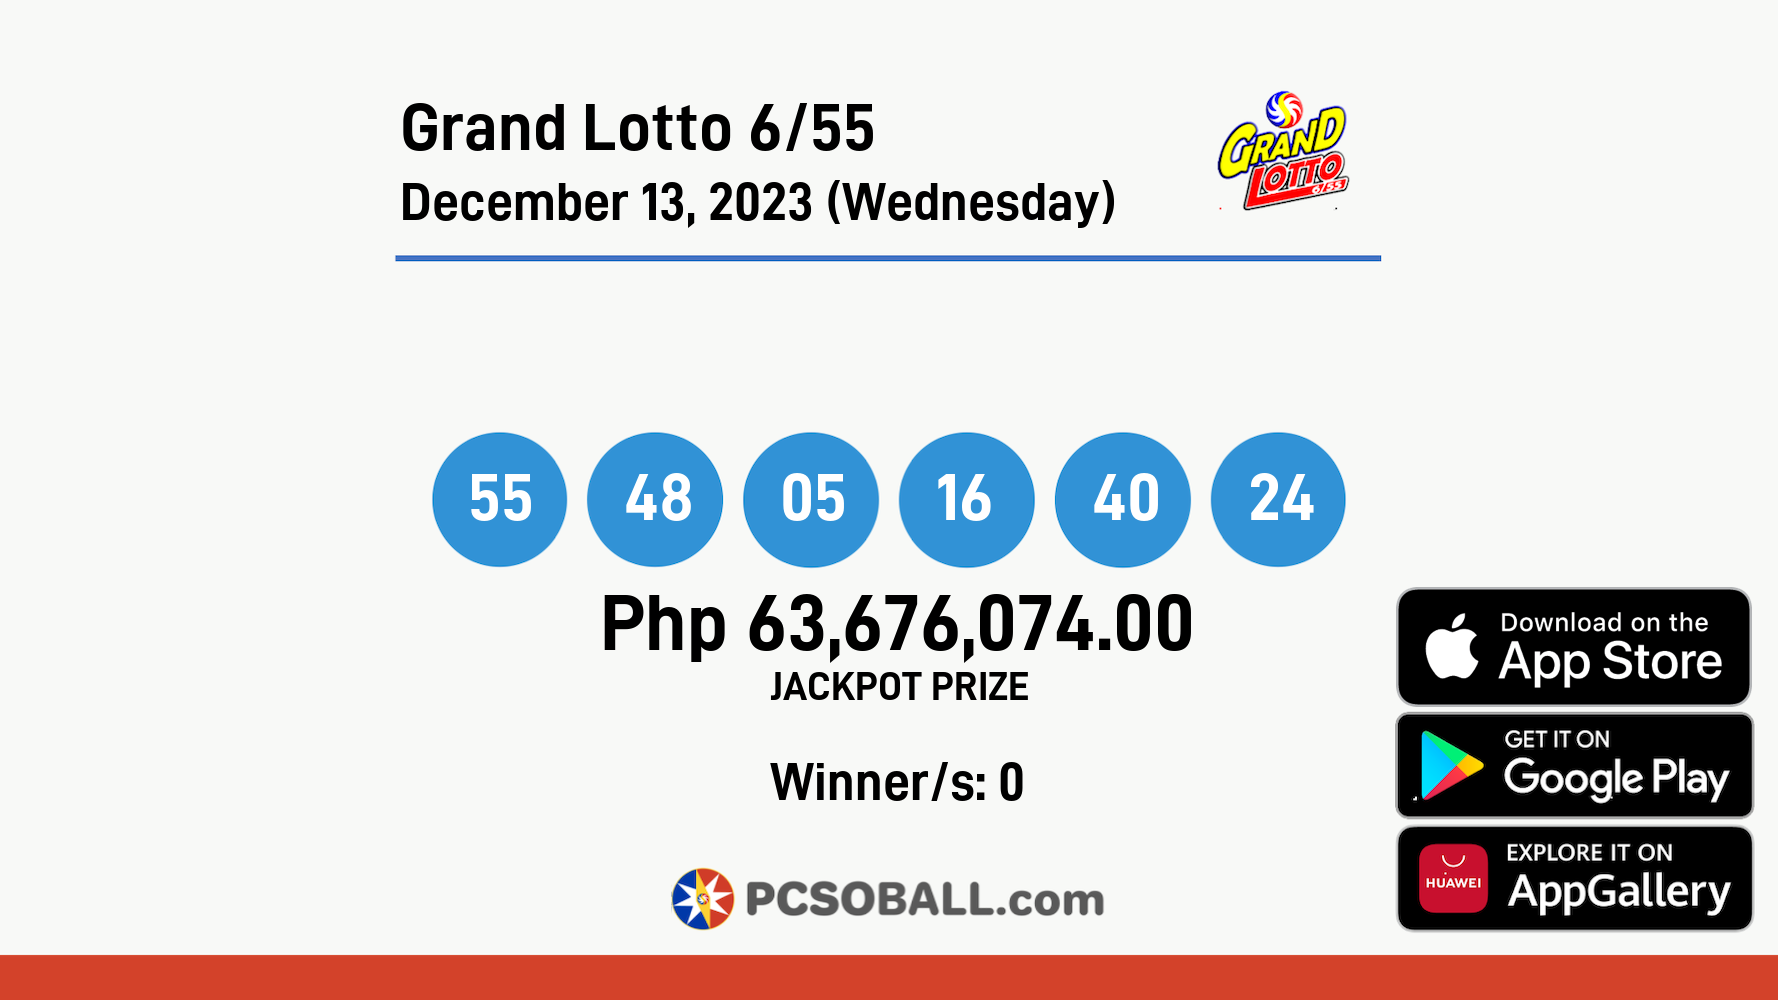 Grand Lotto 6/55 December 13, 2023 (Wednesday) Result